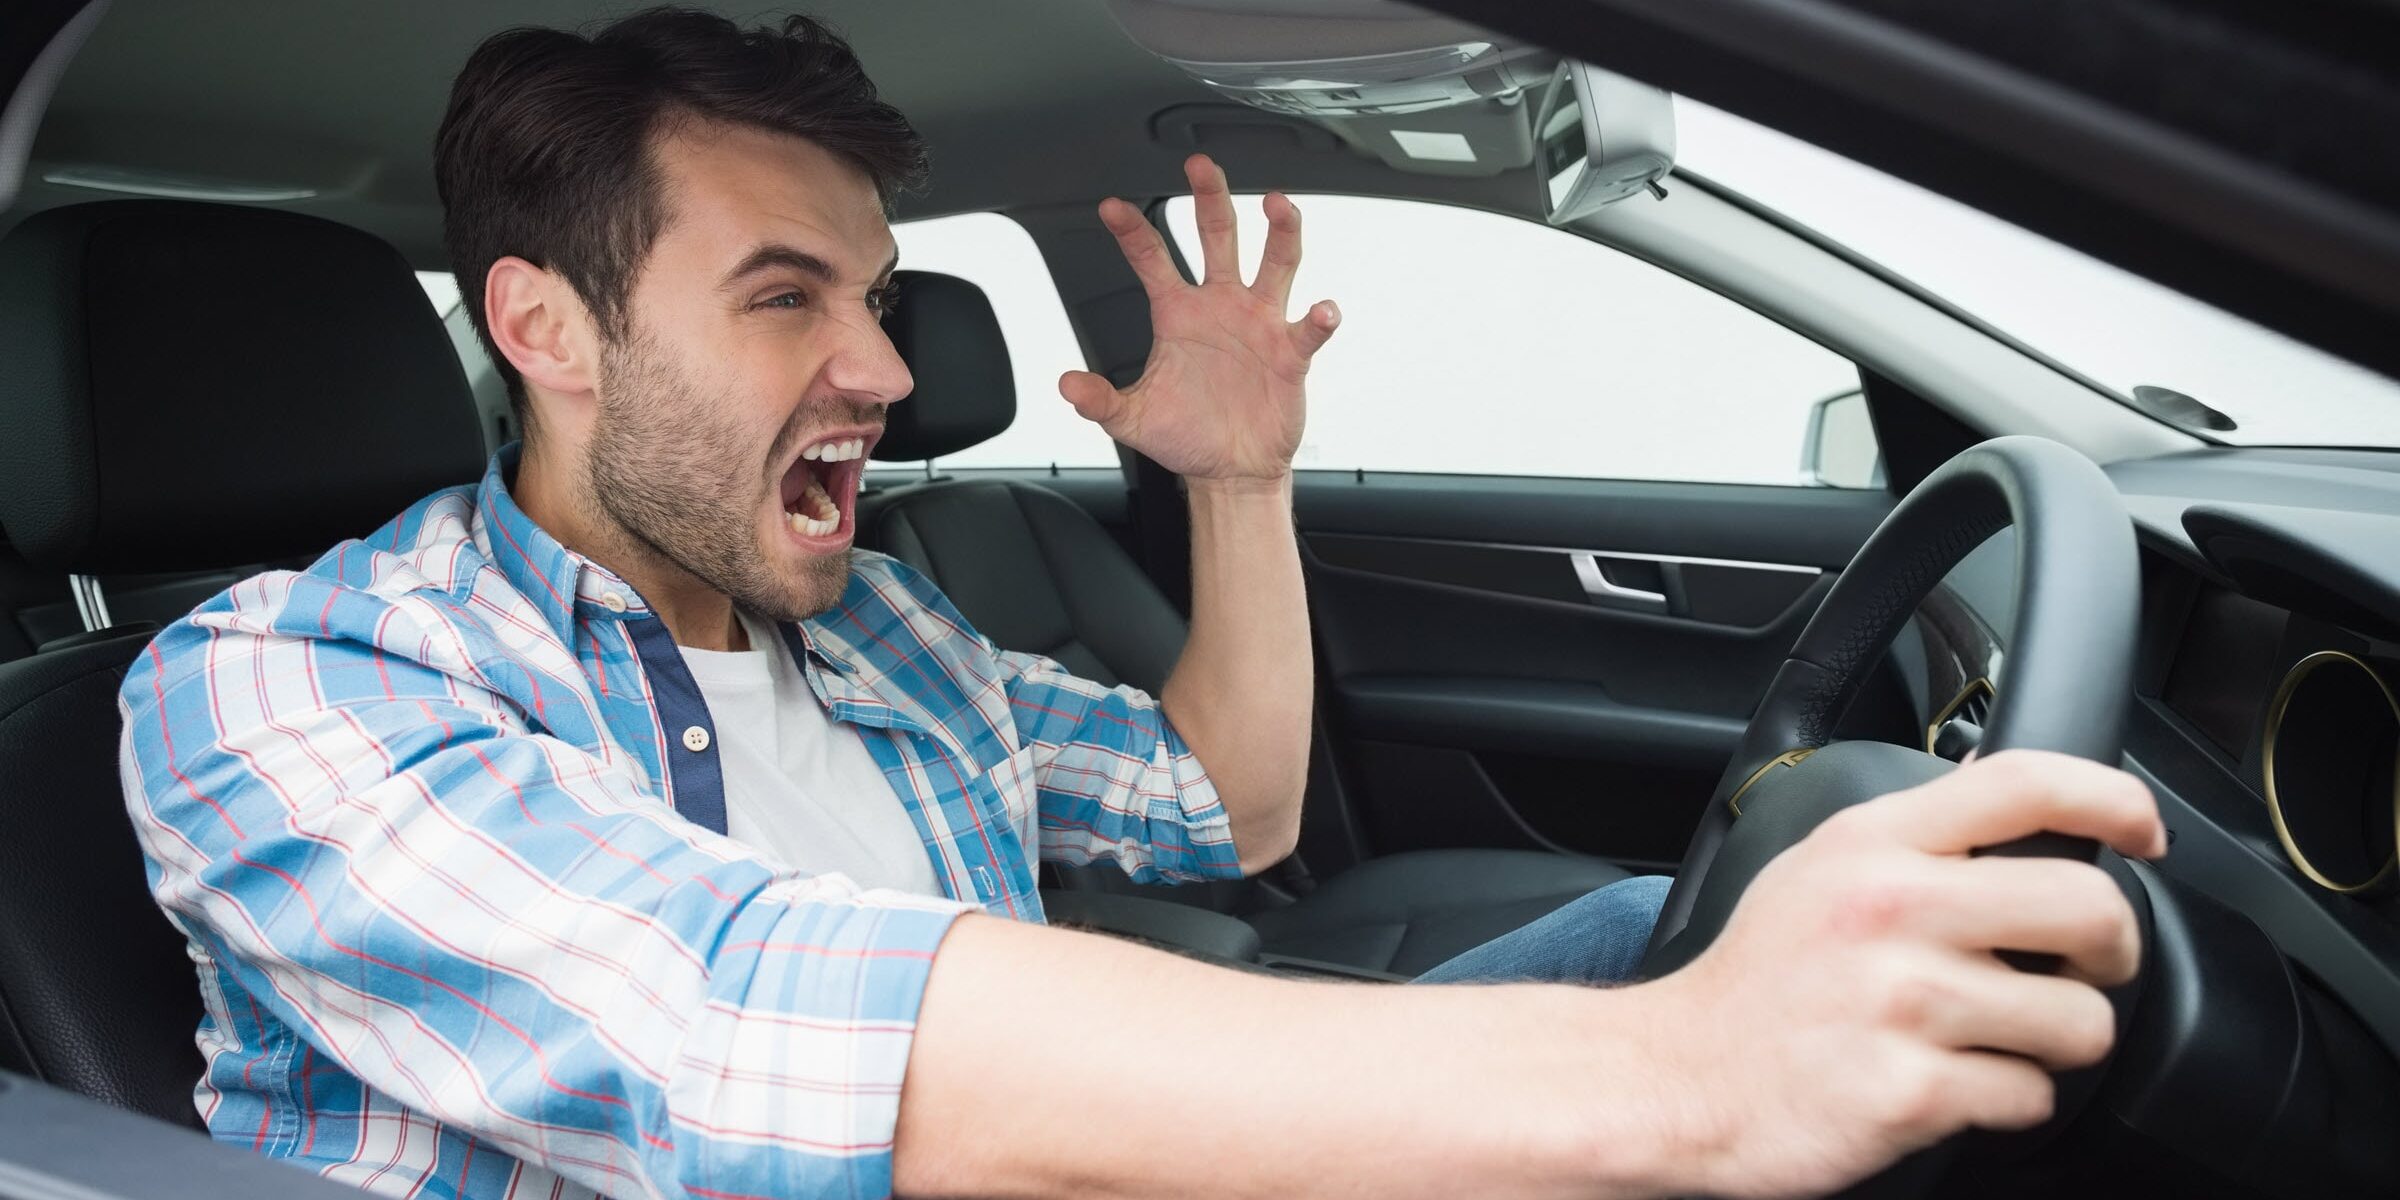 Man experiencing road rage in car.